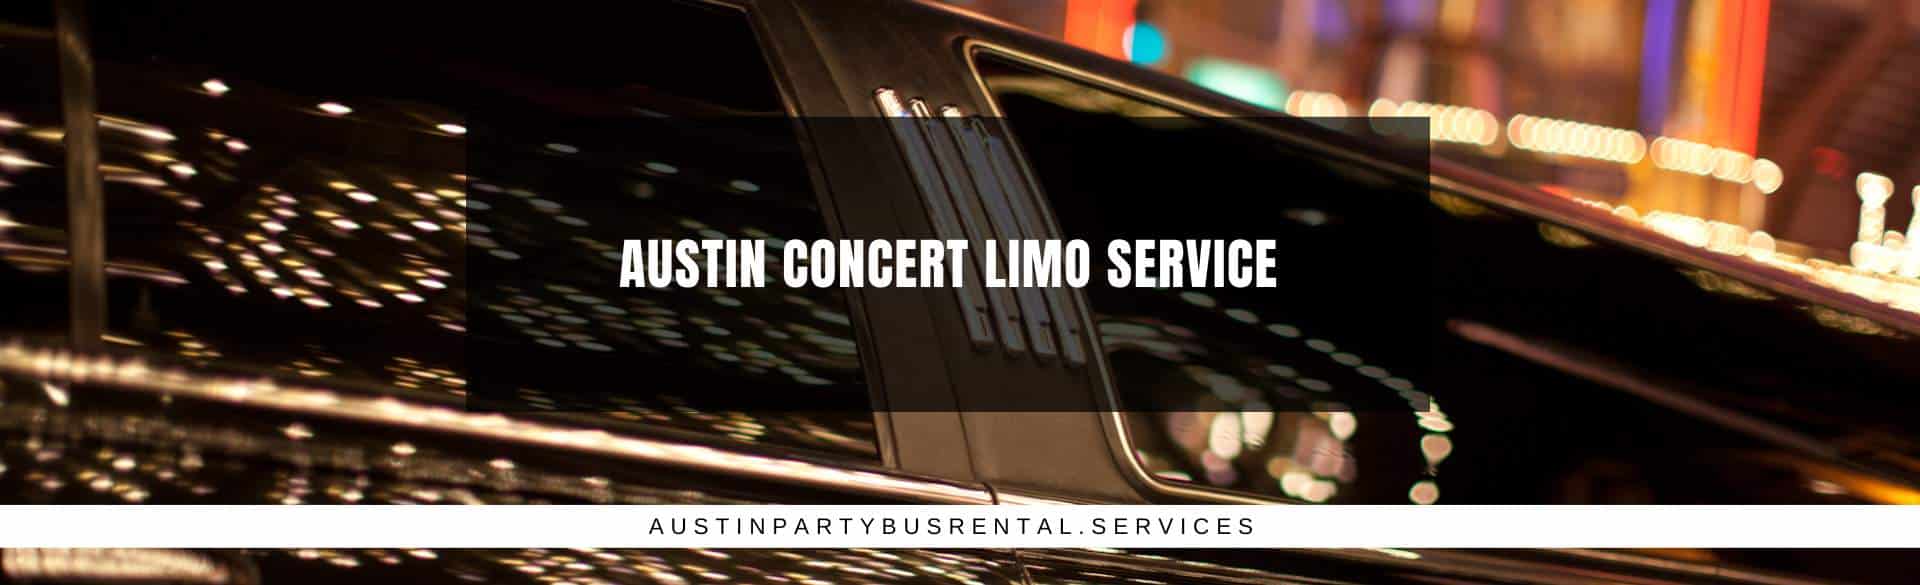 Austin Concert Limo Service